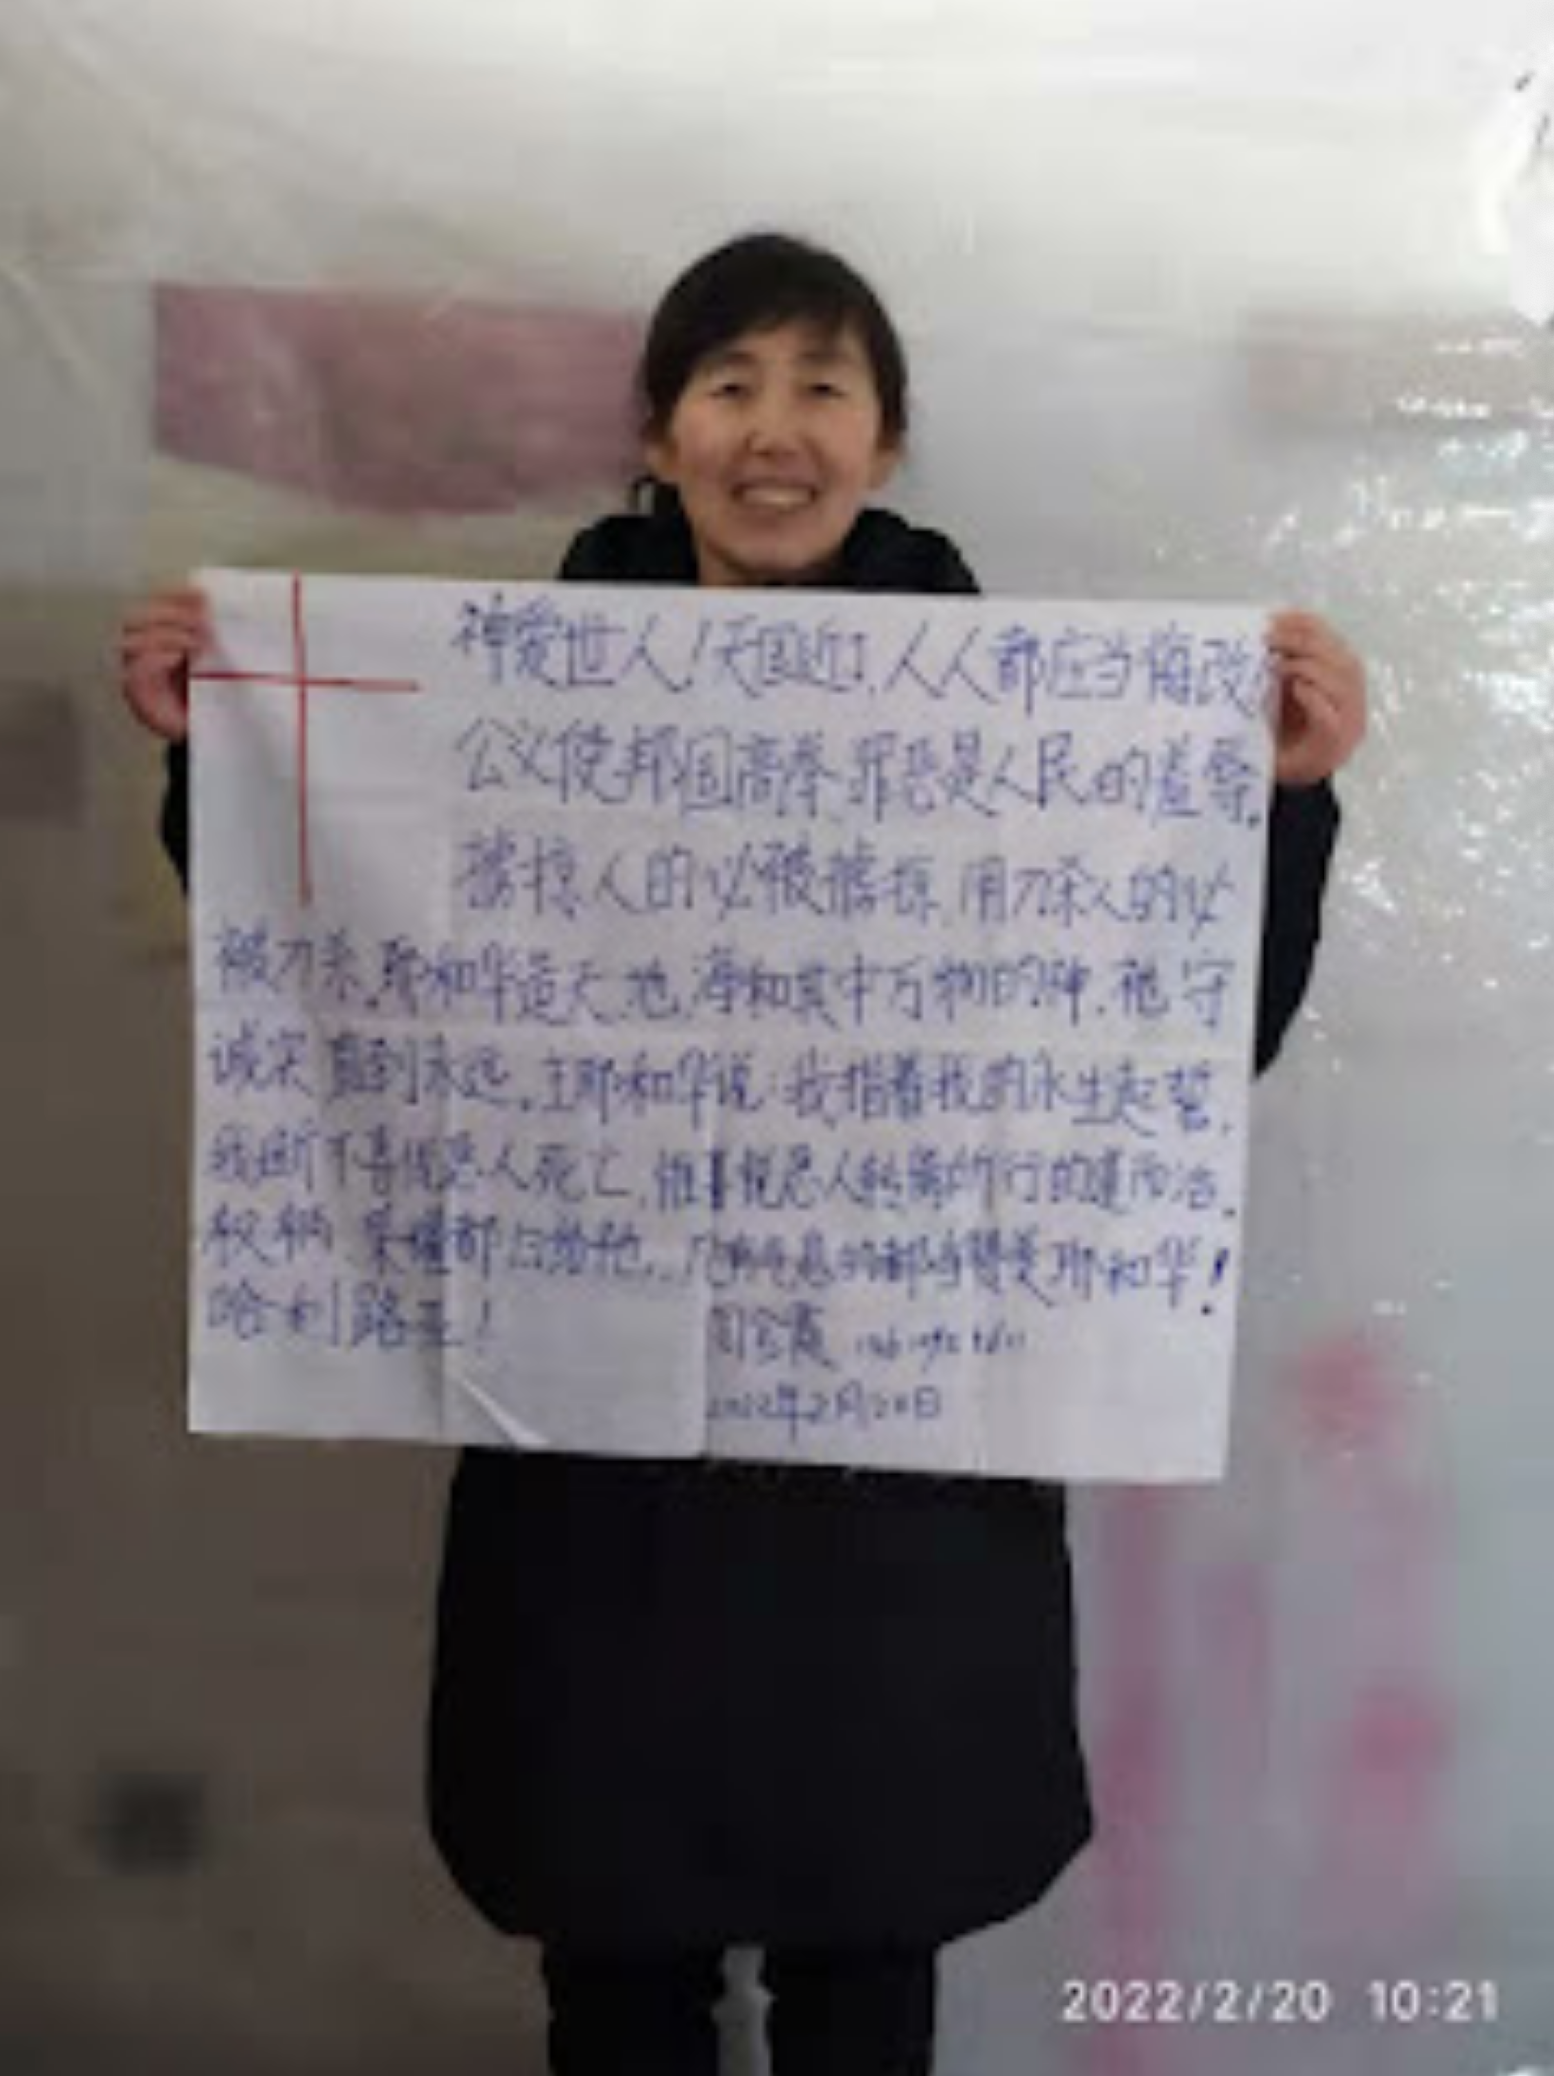 Zhou Jinxia with her Christian message for Xi Jinping. Picture Release International ChinaAid source